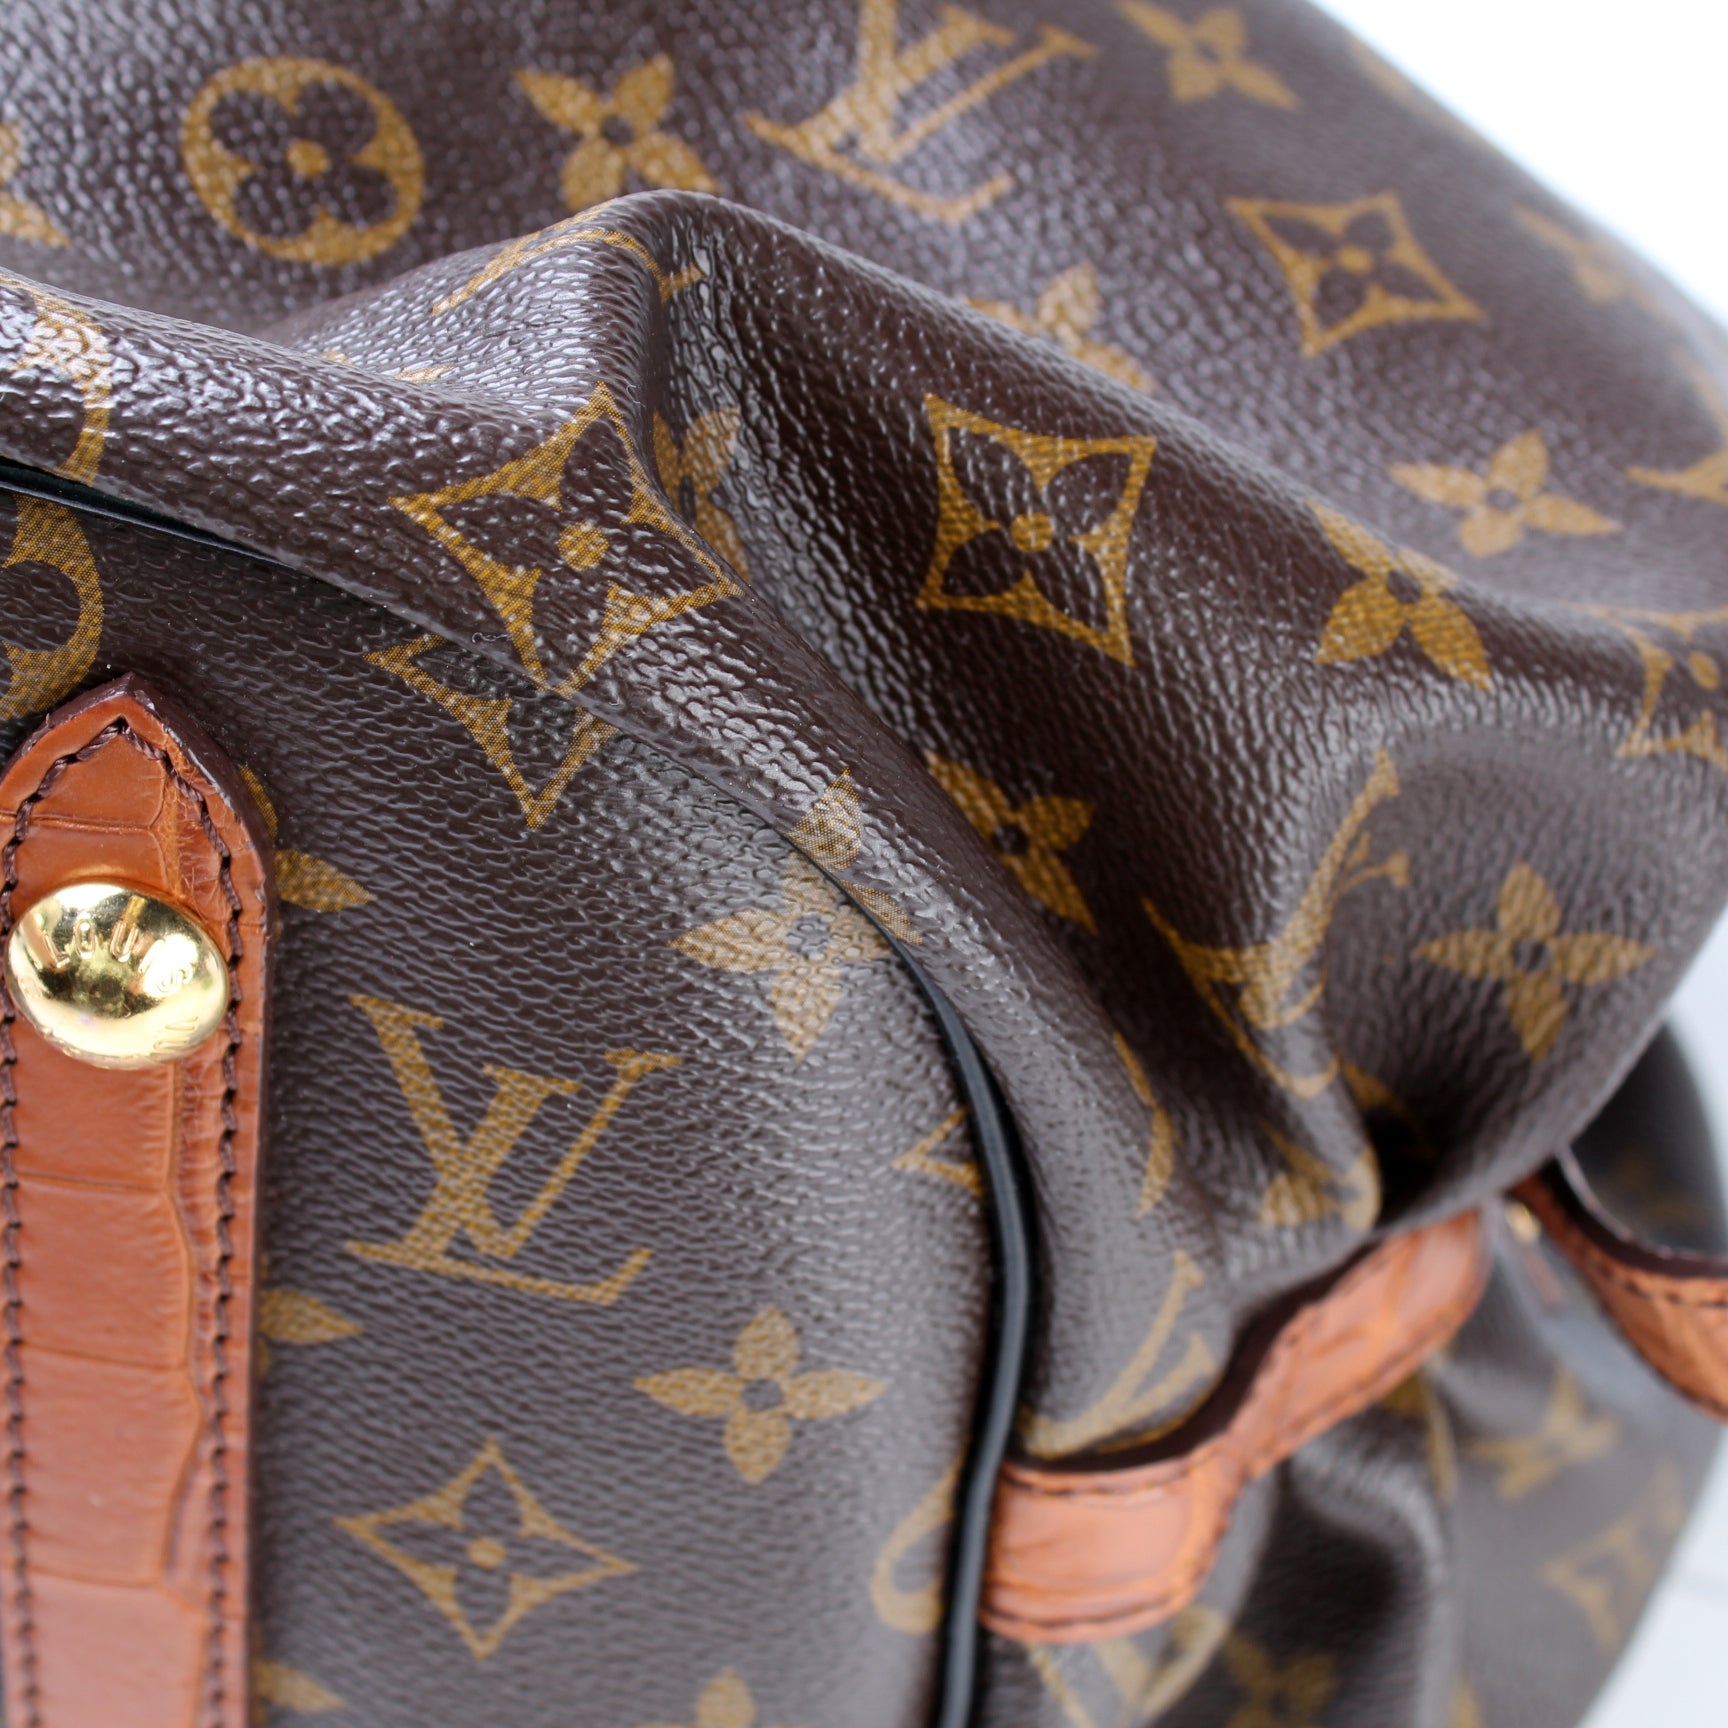 Mahina XL Monogram Alligator Trim – Keeks Designer Handbags